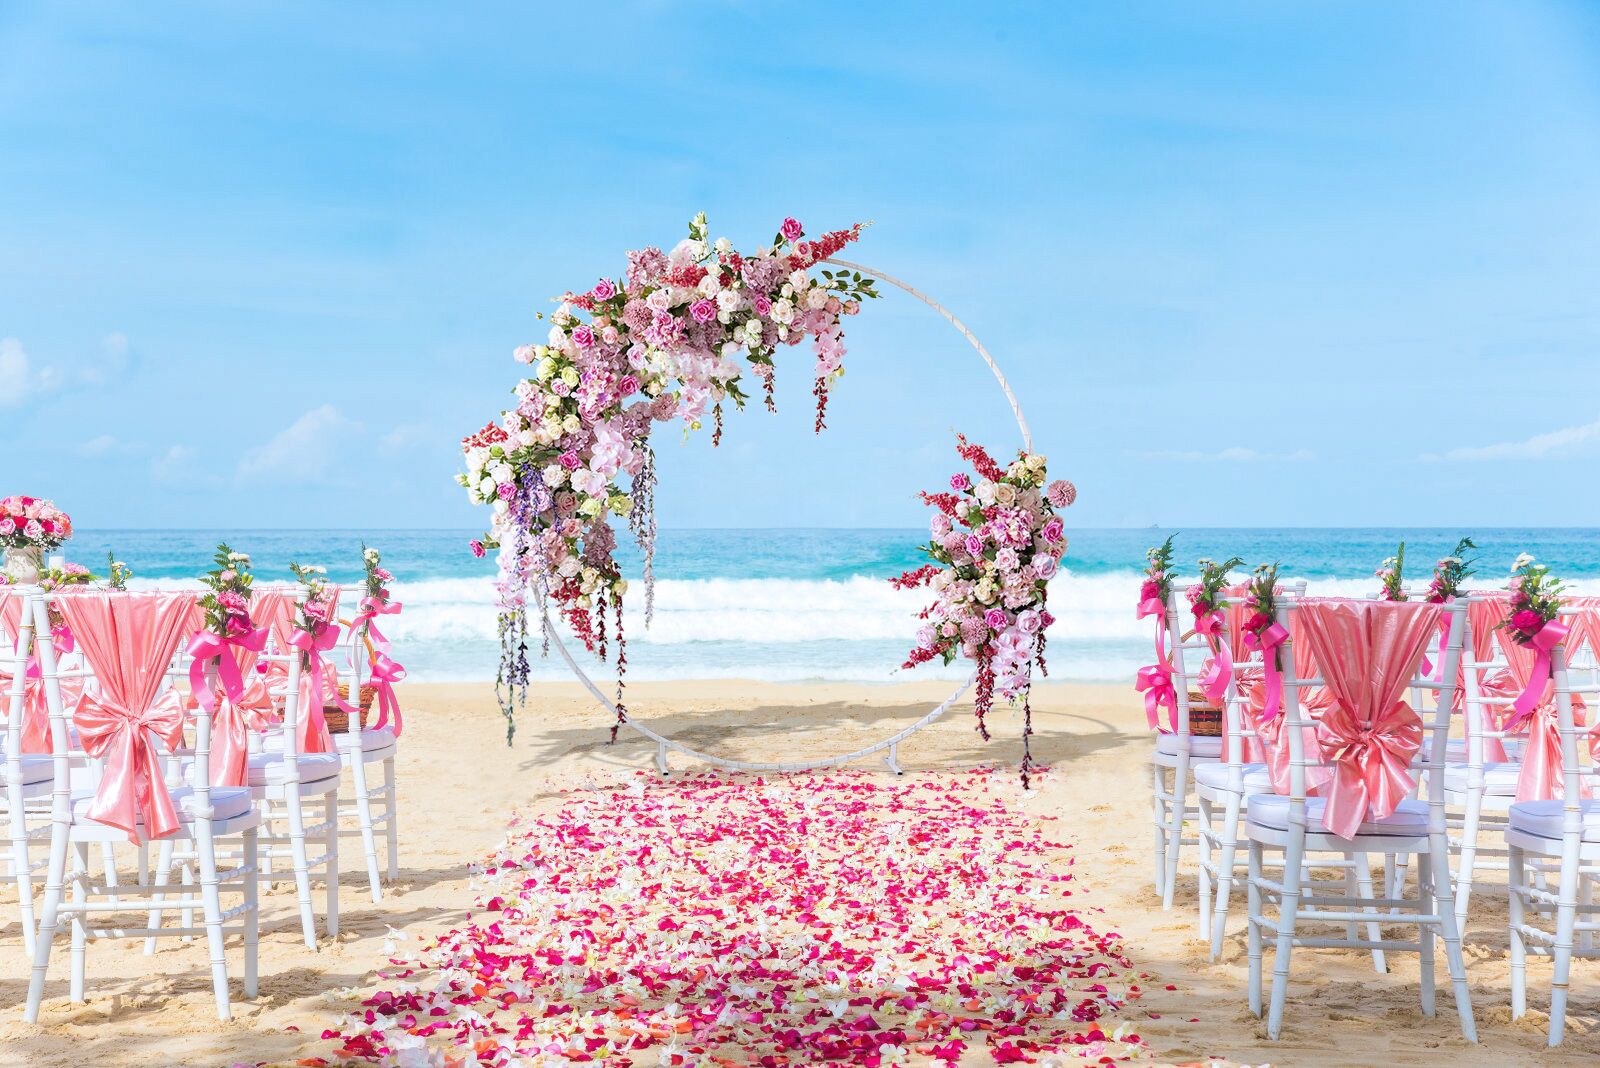 sunset beach wedding decorations1